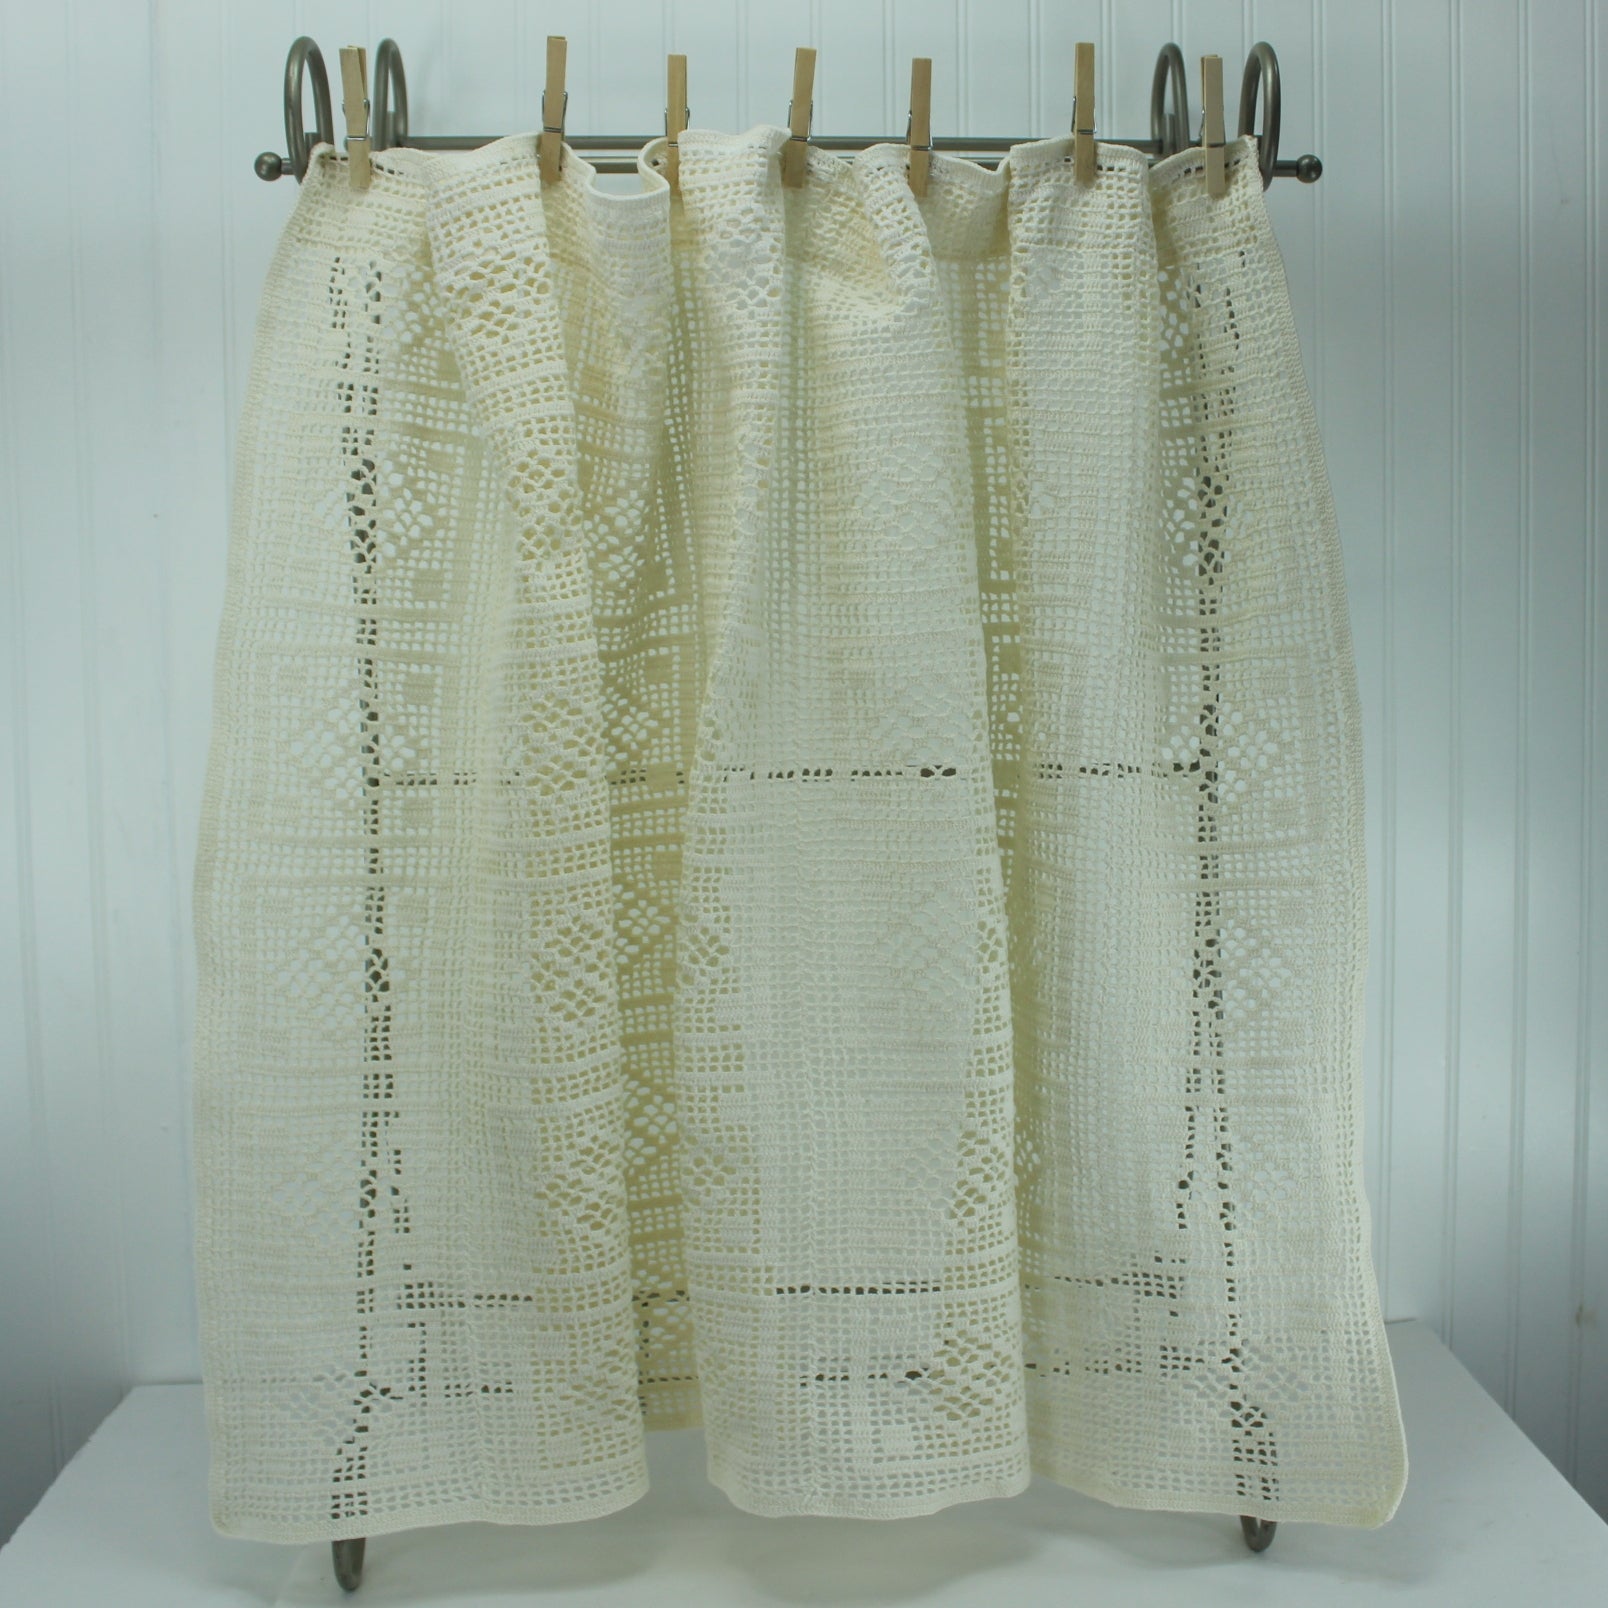 Crochet Window Curtain 2 Panels & Valance Heavy Cotton Hand Made 2 panels photo shows closeup